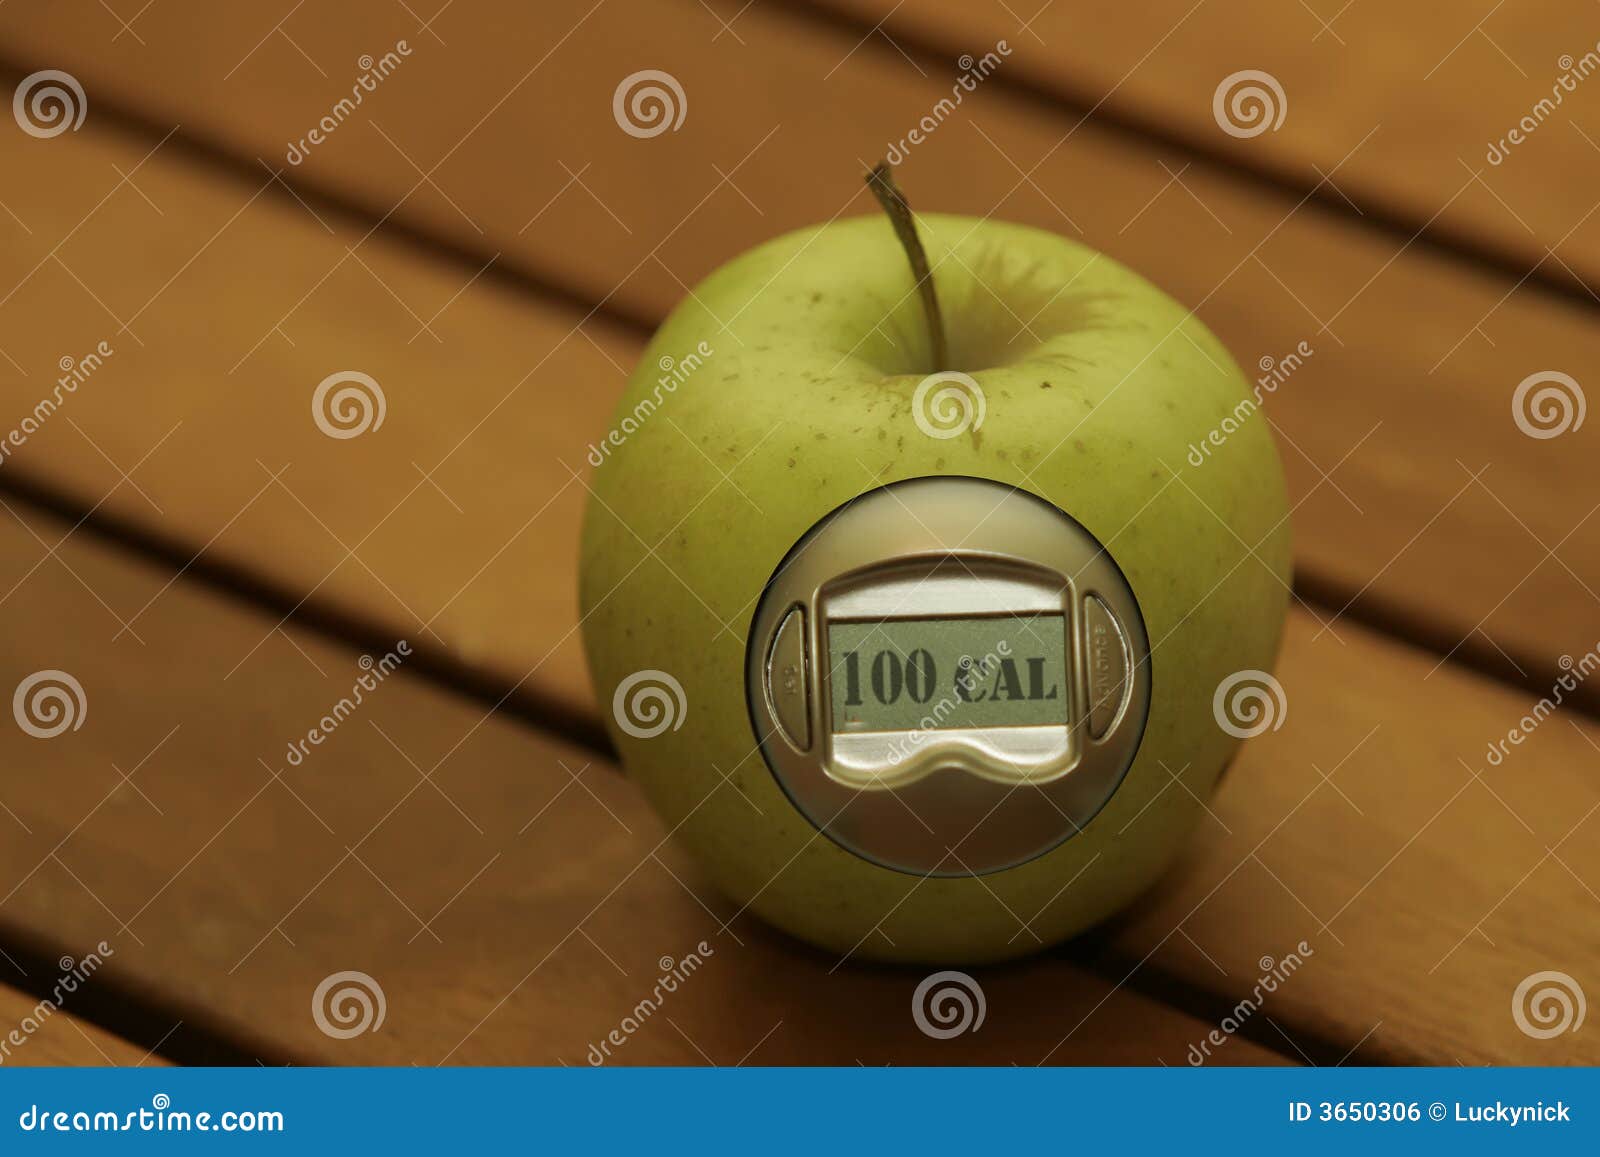 apple calorie meter